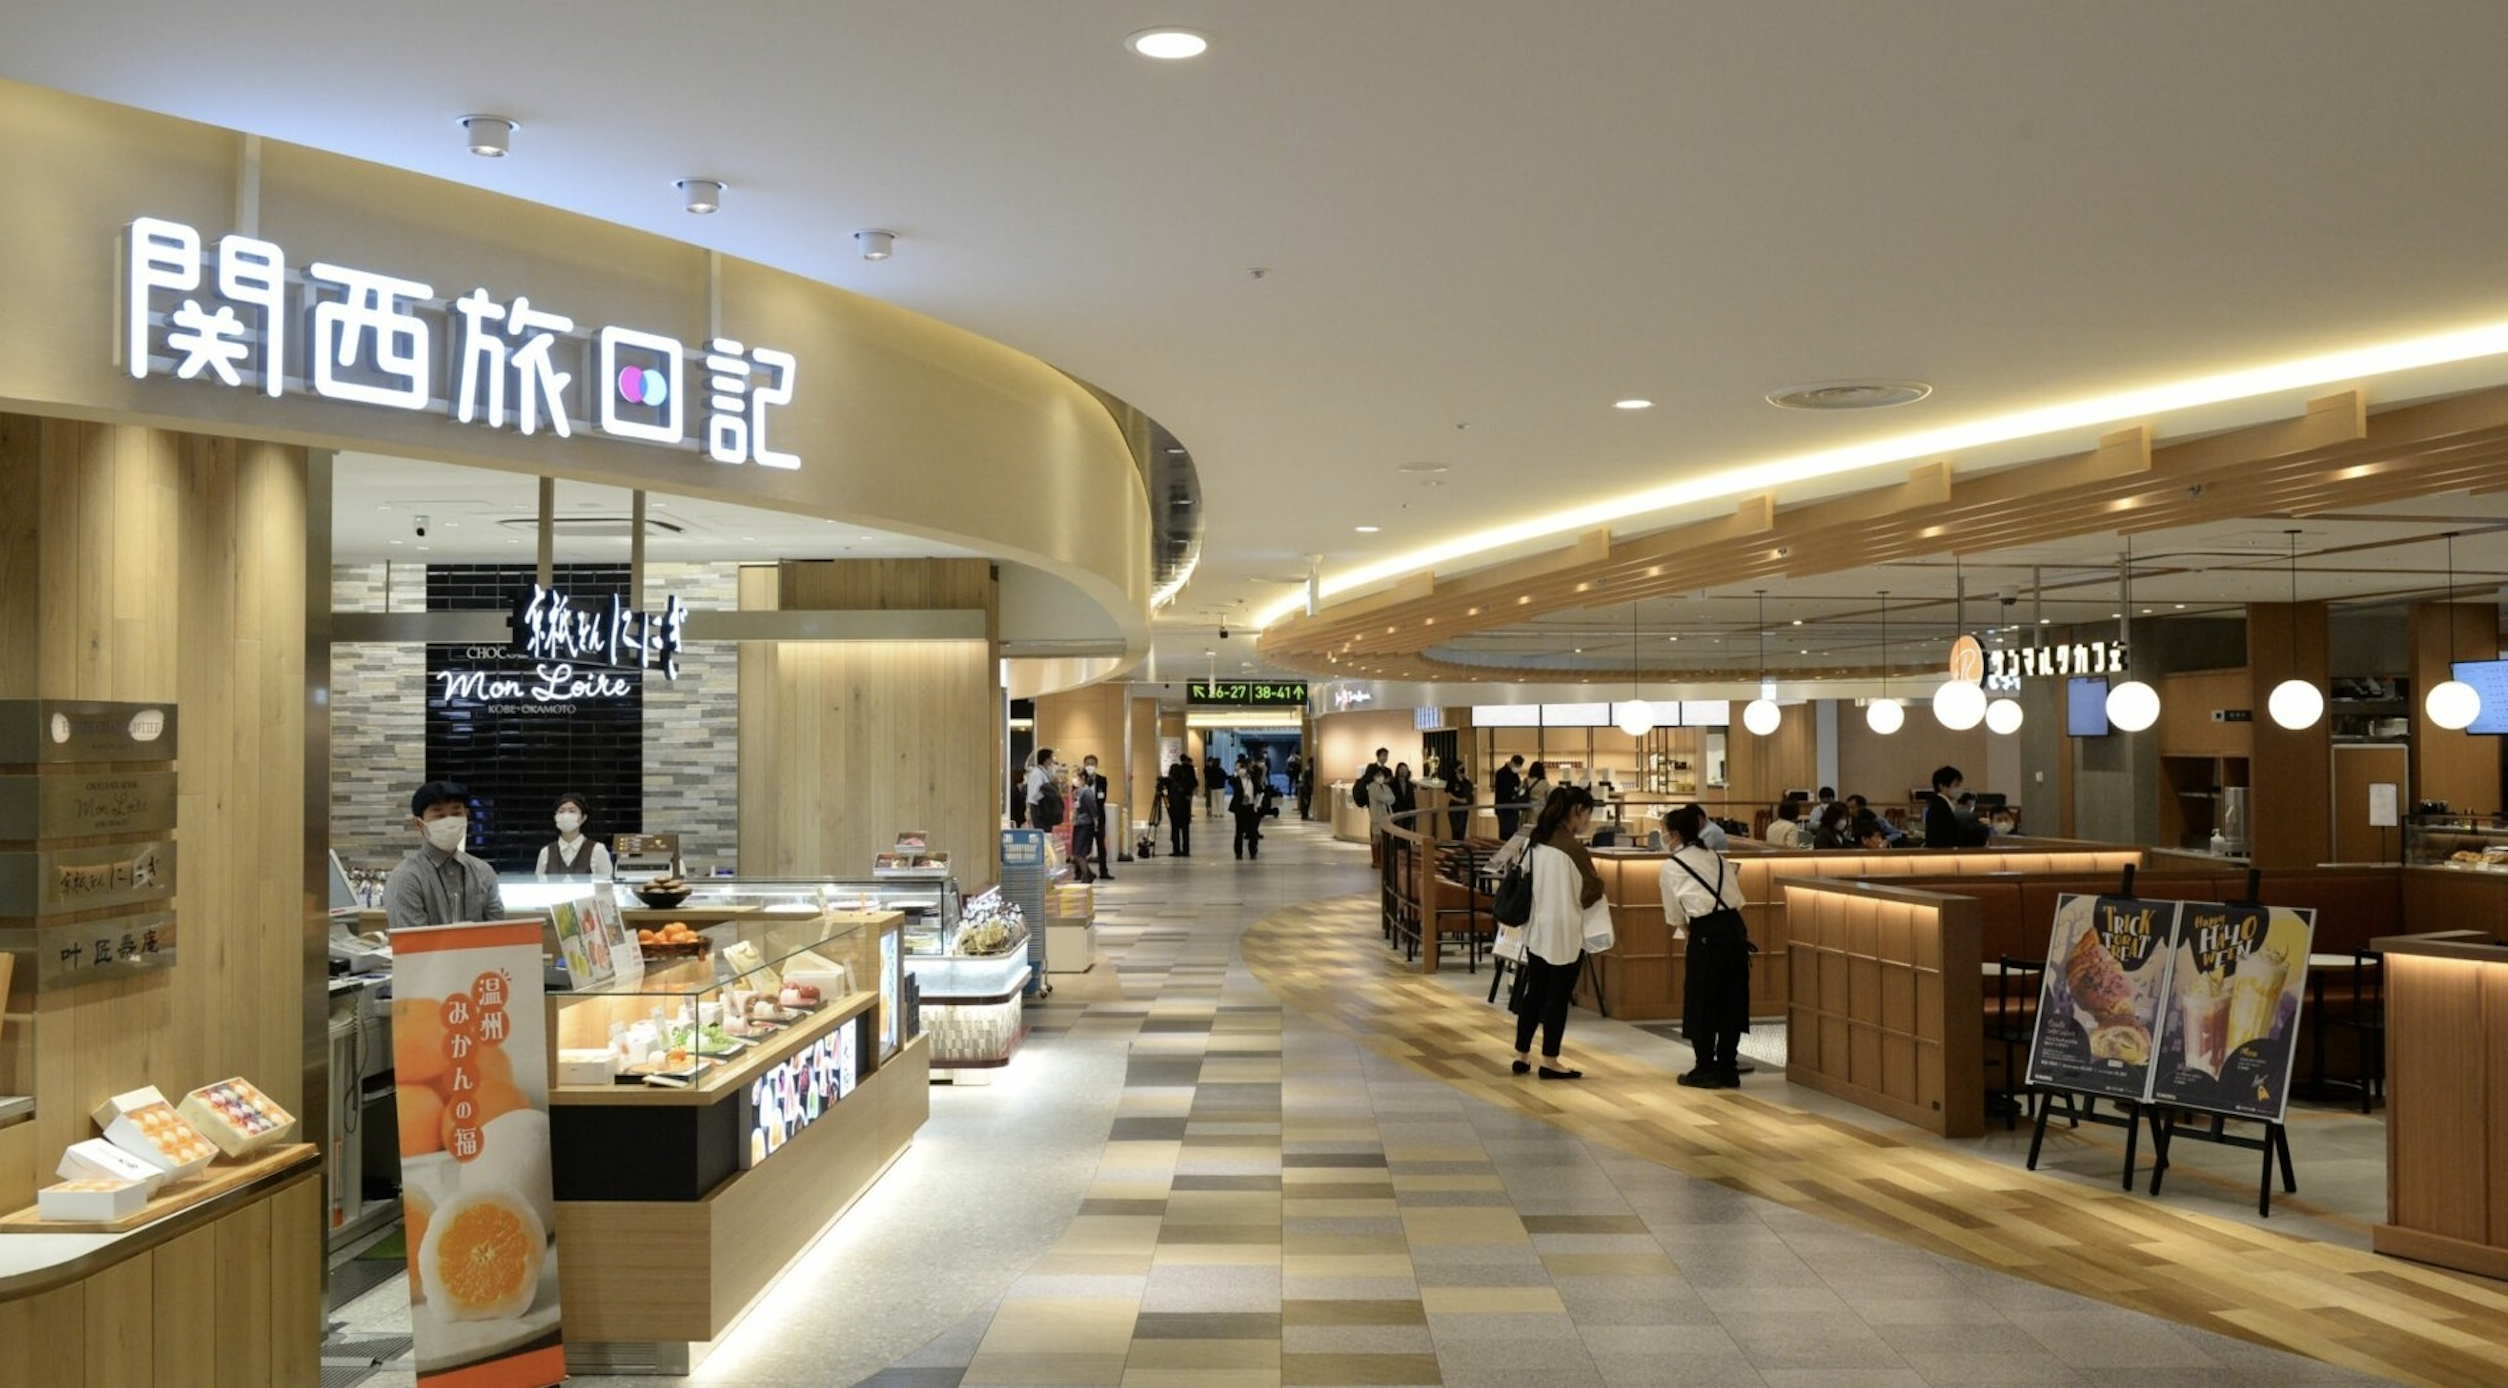 New dining options at Kansai International Airport